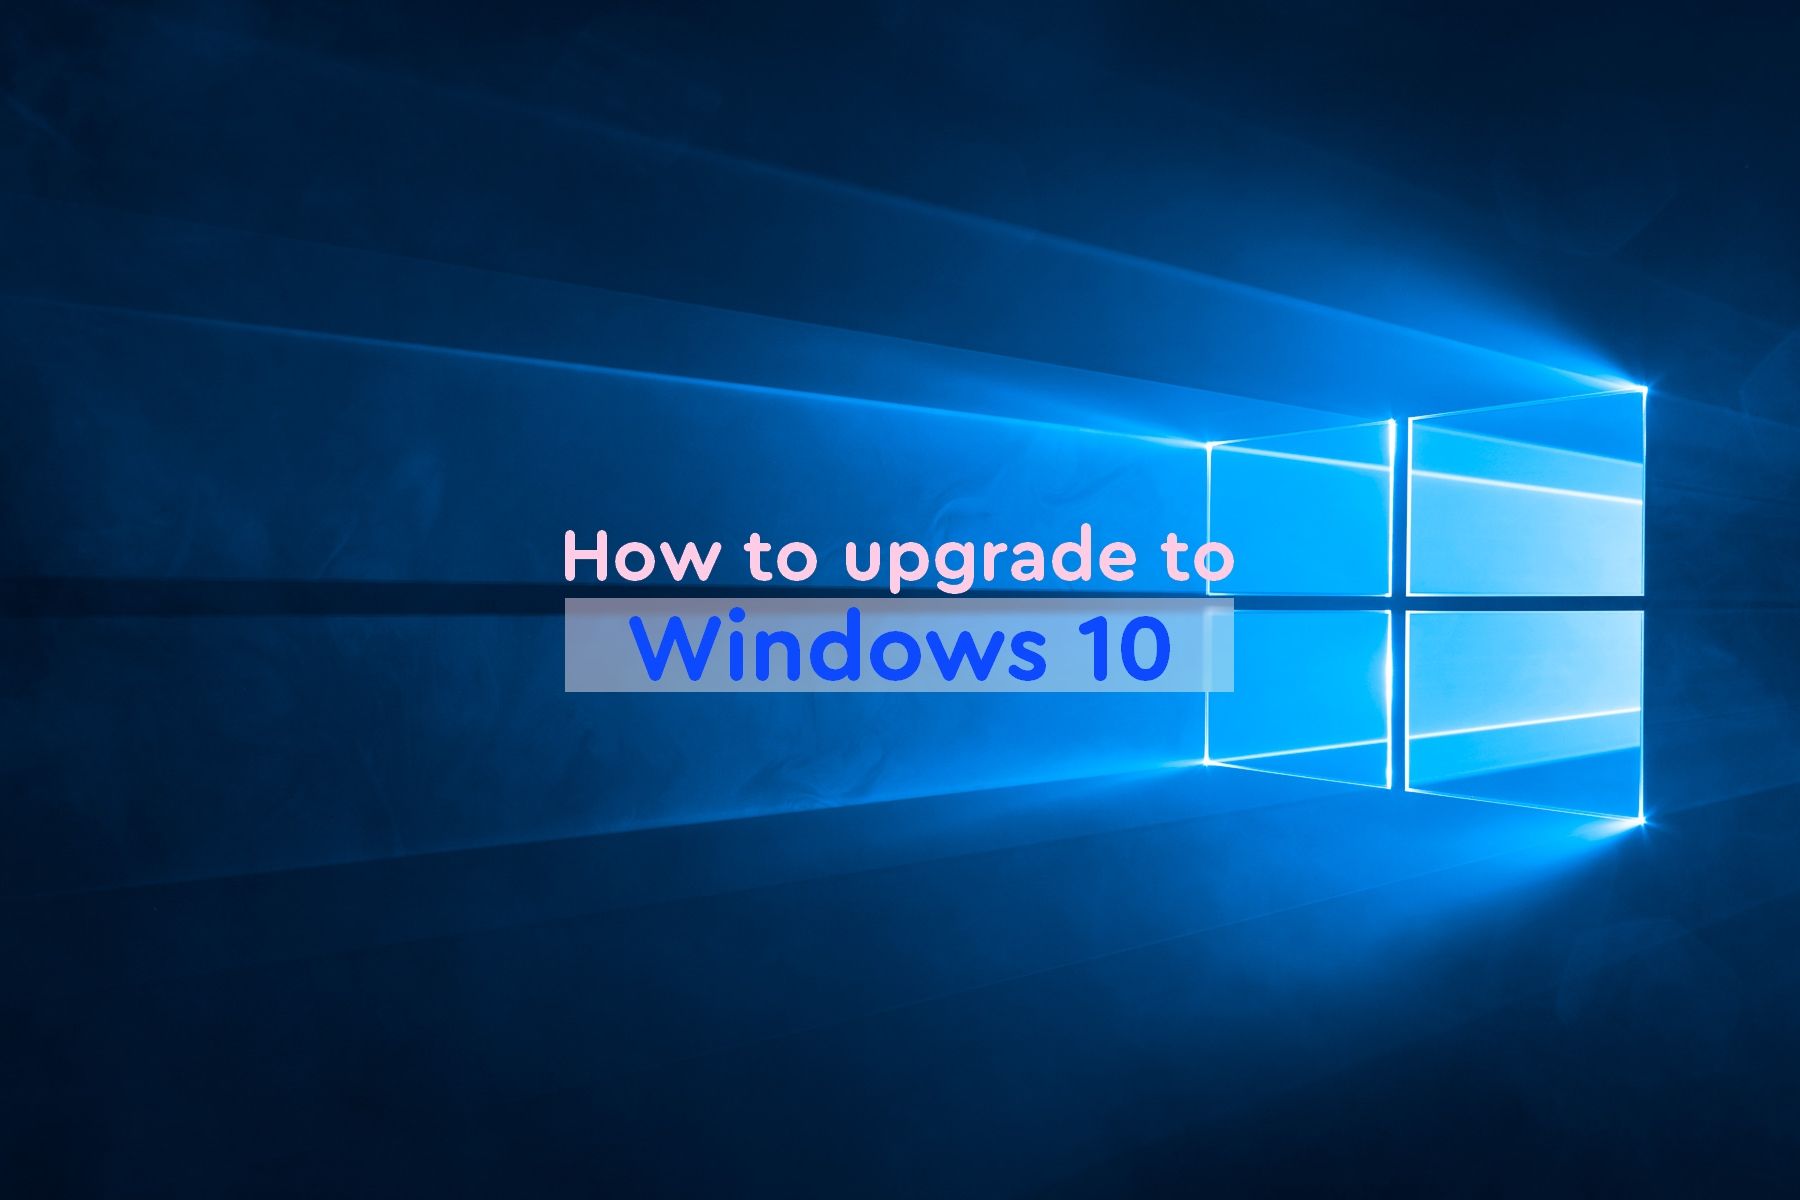 upgrade to windows 10 pro using windows 8.1 key